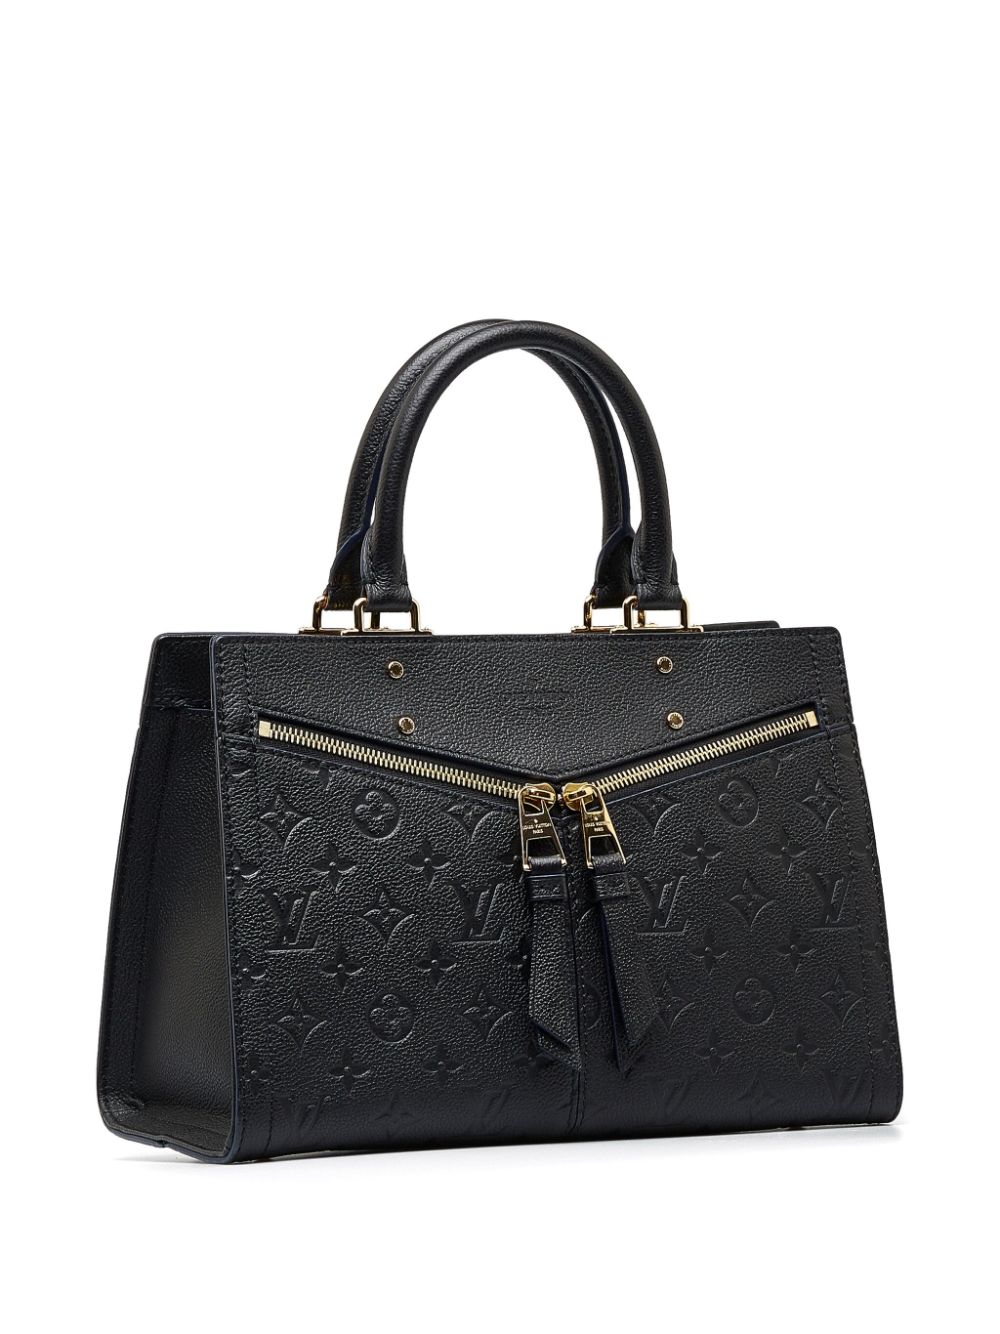 Louis Vuitton Black Monogram Empreinte Leather Sully PM Bag Louis